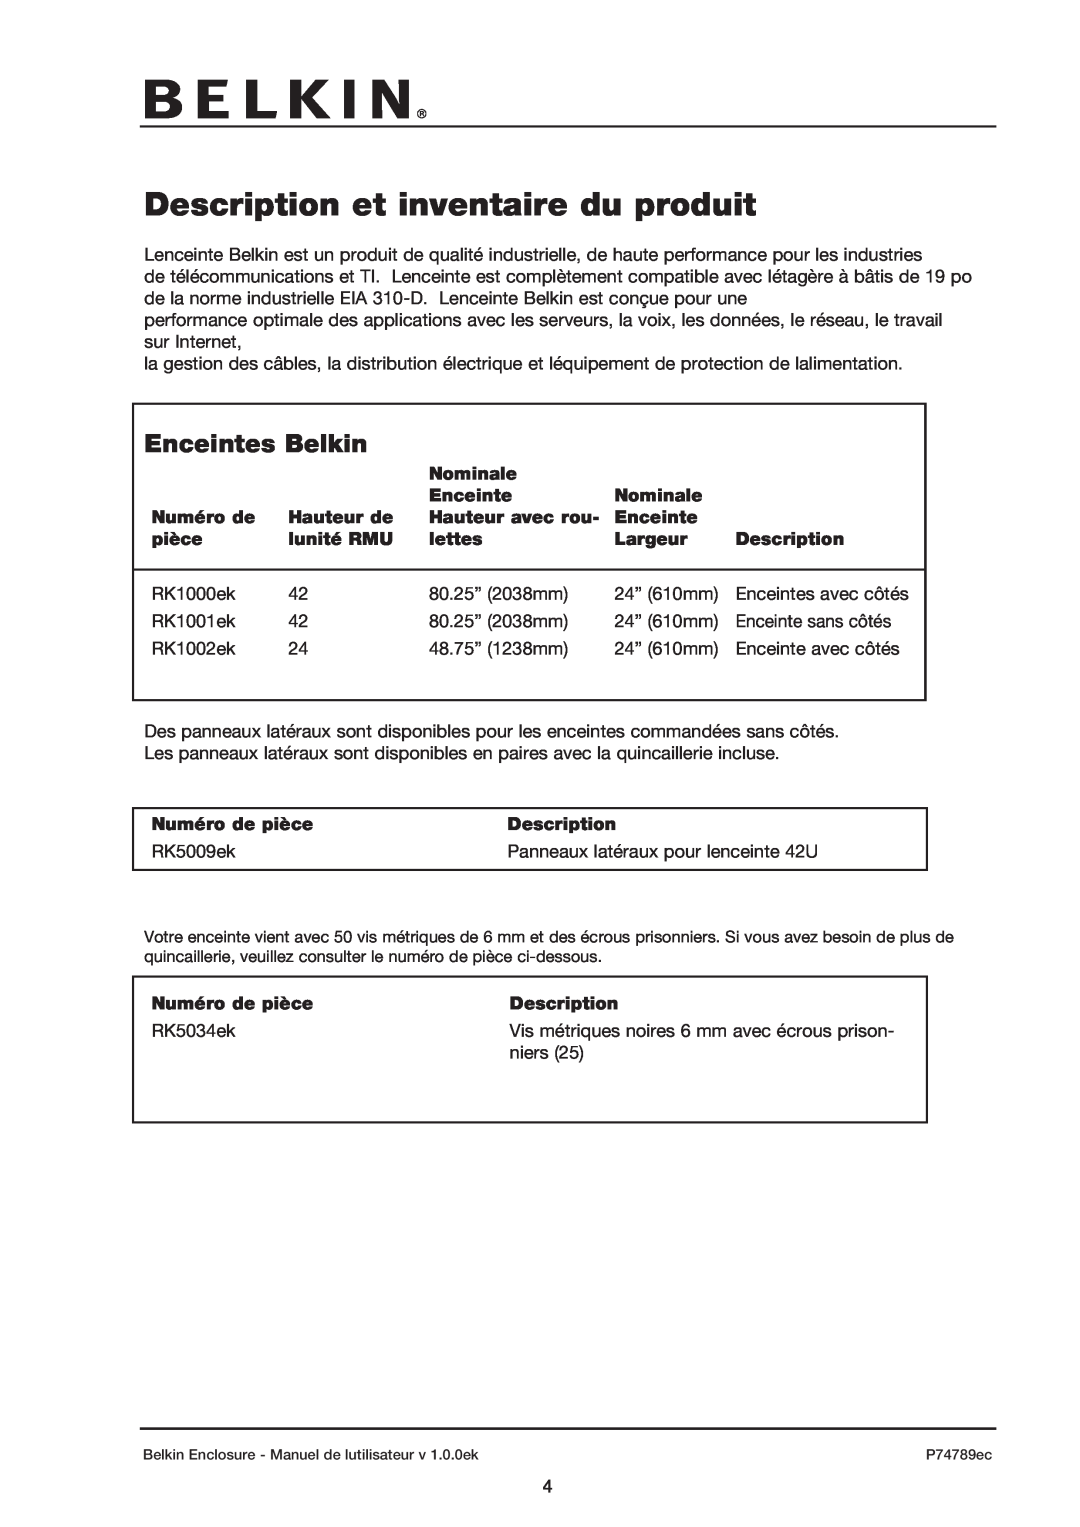 Belkin 42U user manual Description et inventaire du produit, Enceintes Belkin 